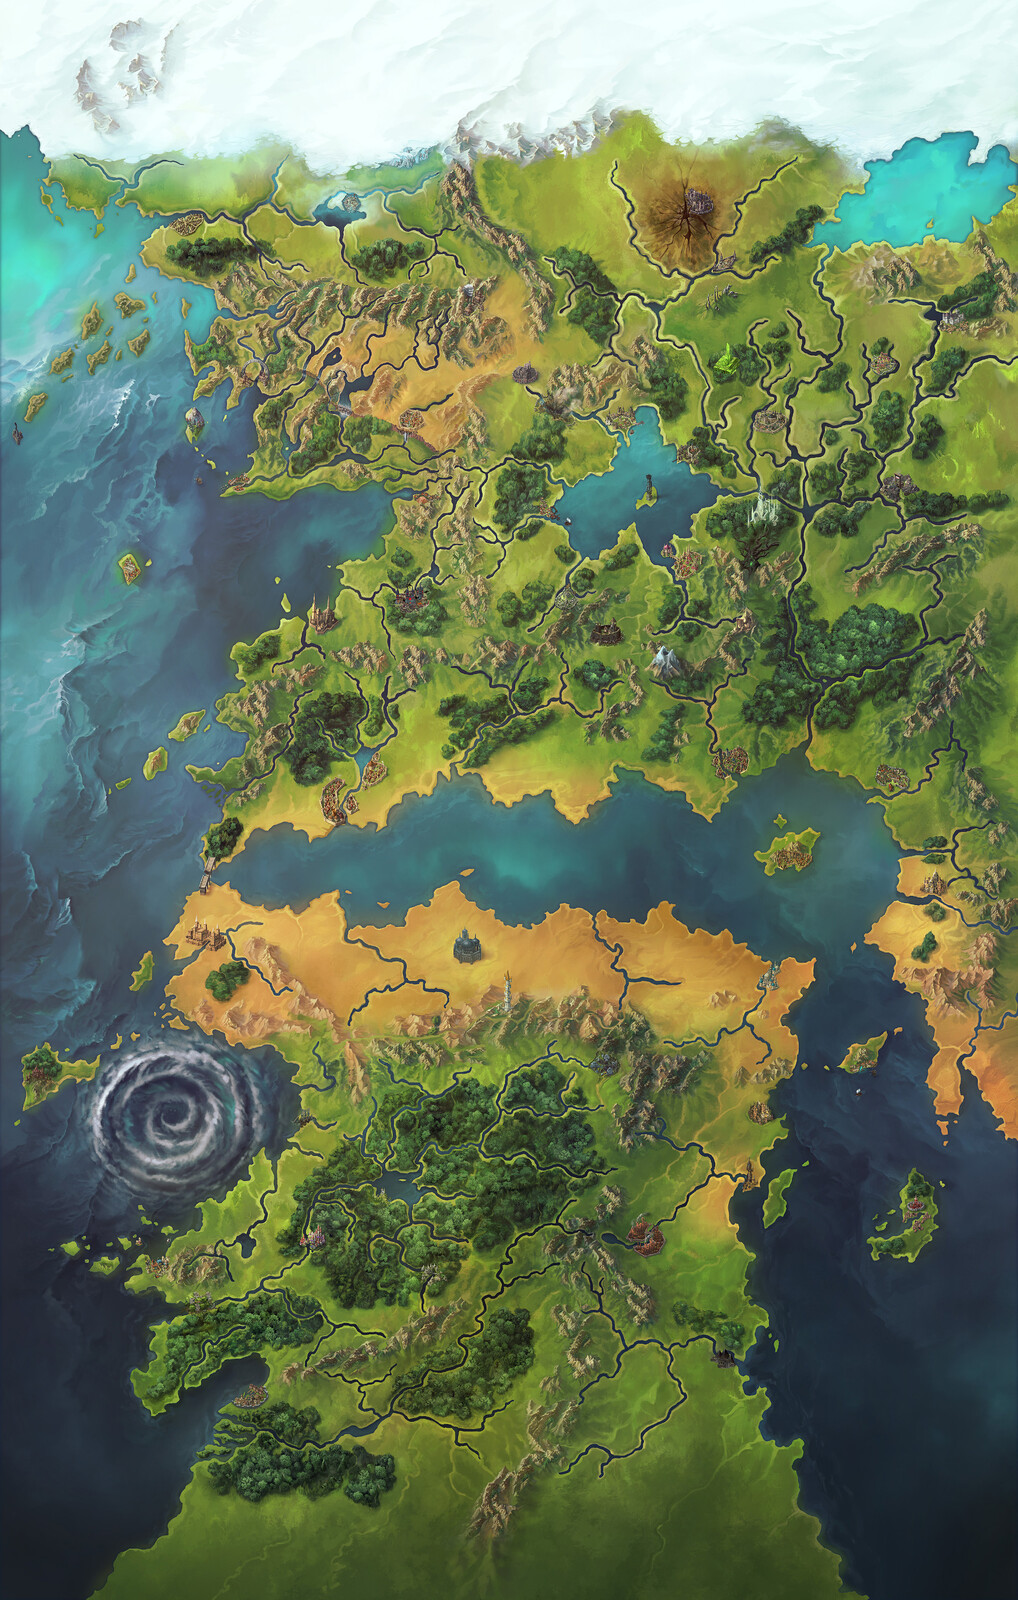 Pathfinder Second Edition: Inner Sea World Map